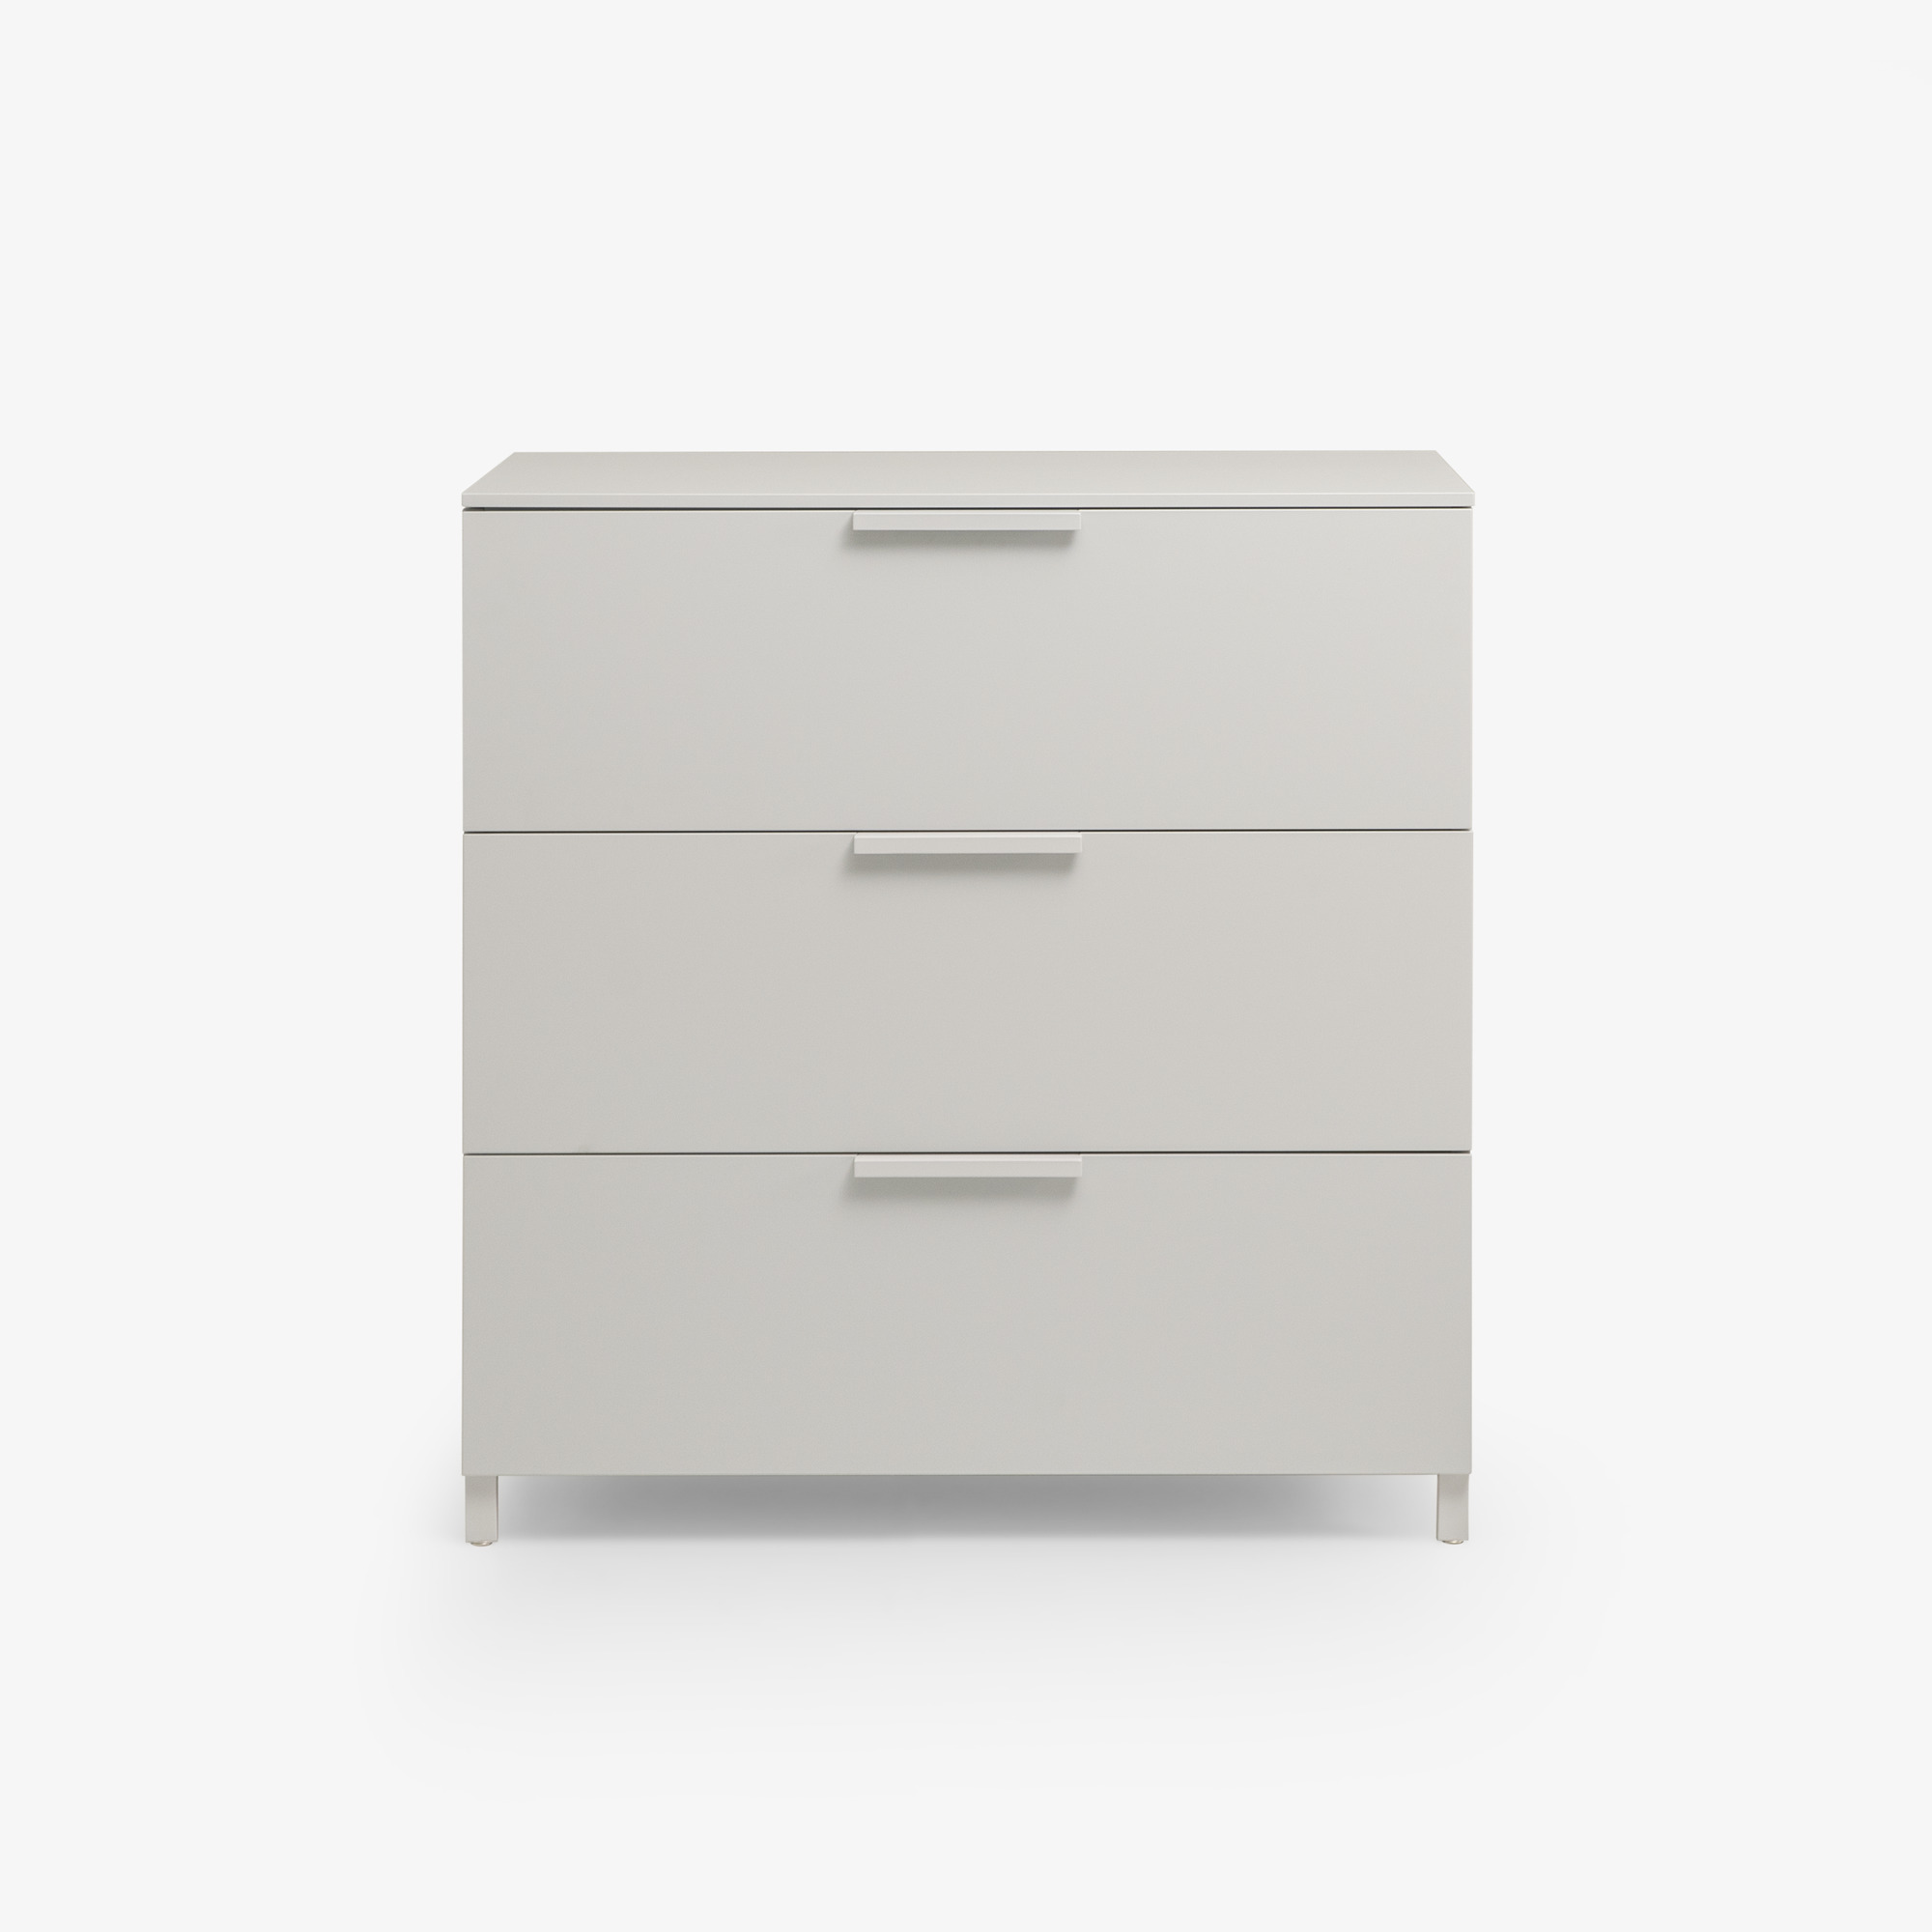 Image Sideboard unit 3 drawers c 3 1